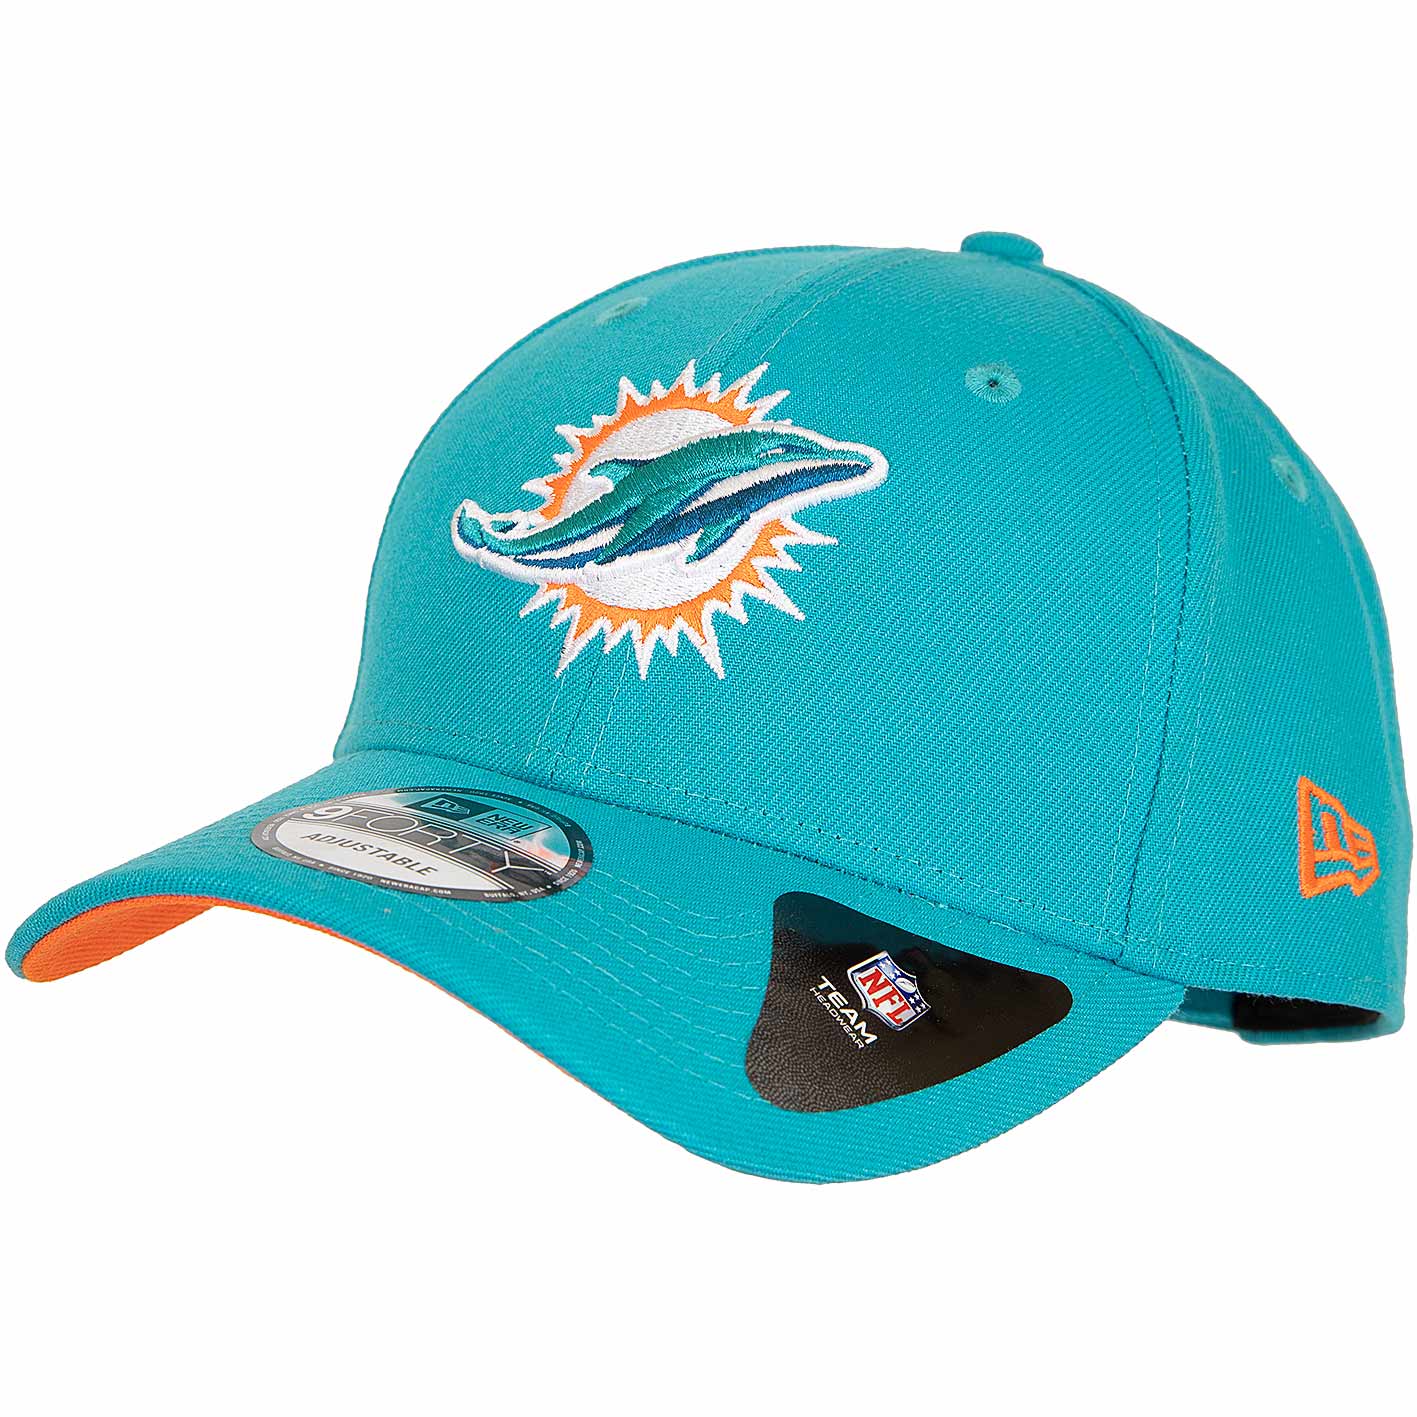 ☆ New Era 9Forty NFL The League Miami Dolphins Cap - hier bestellen!